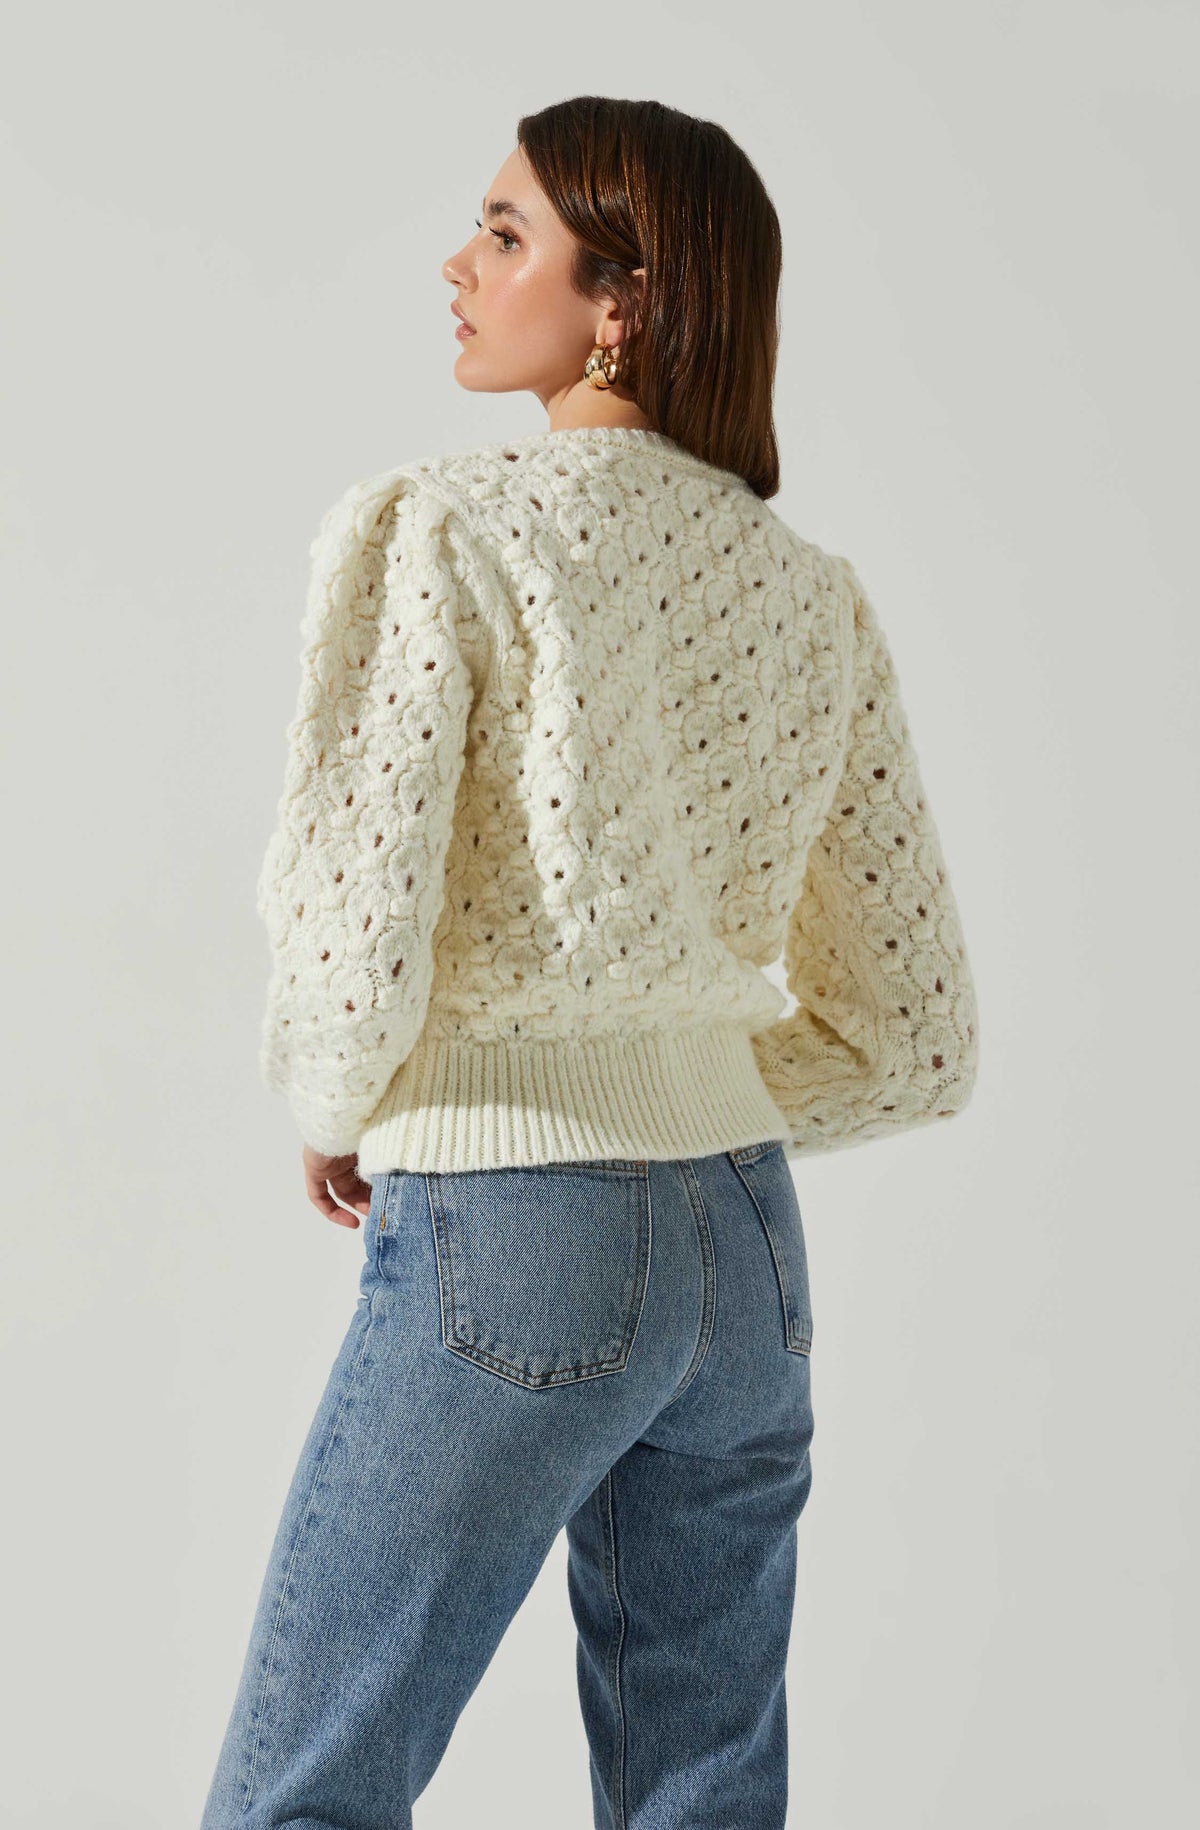 Bianca V Neck Pointelle Sweater - Cream / XS